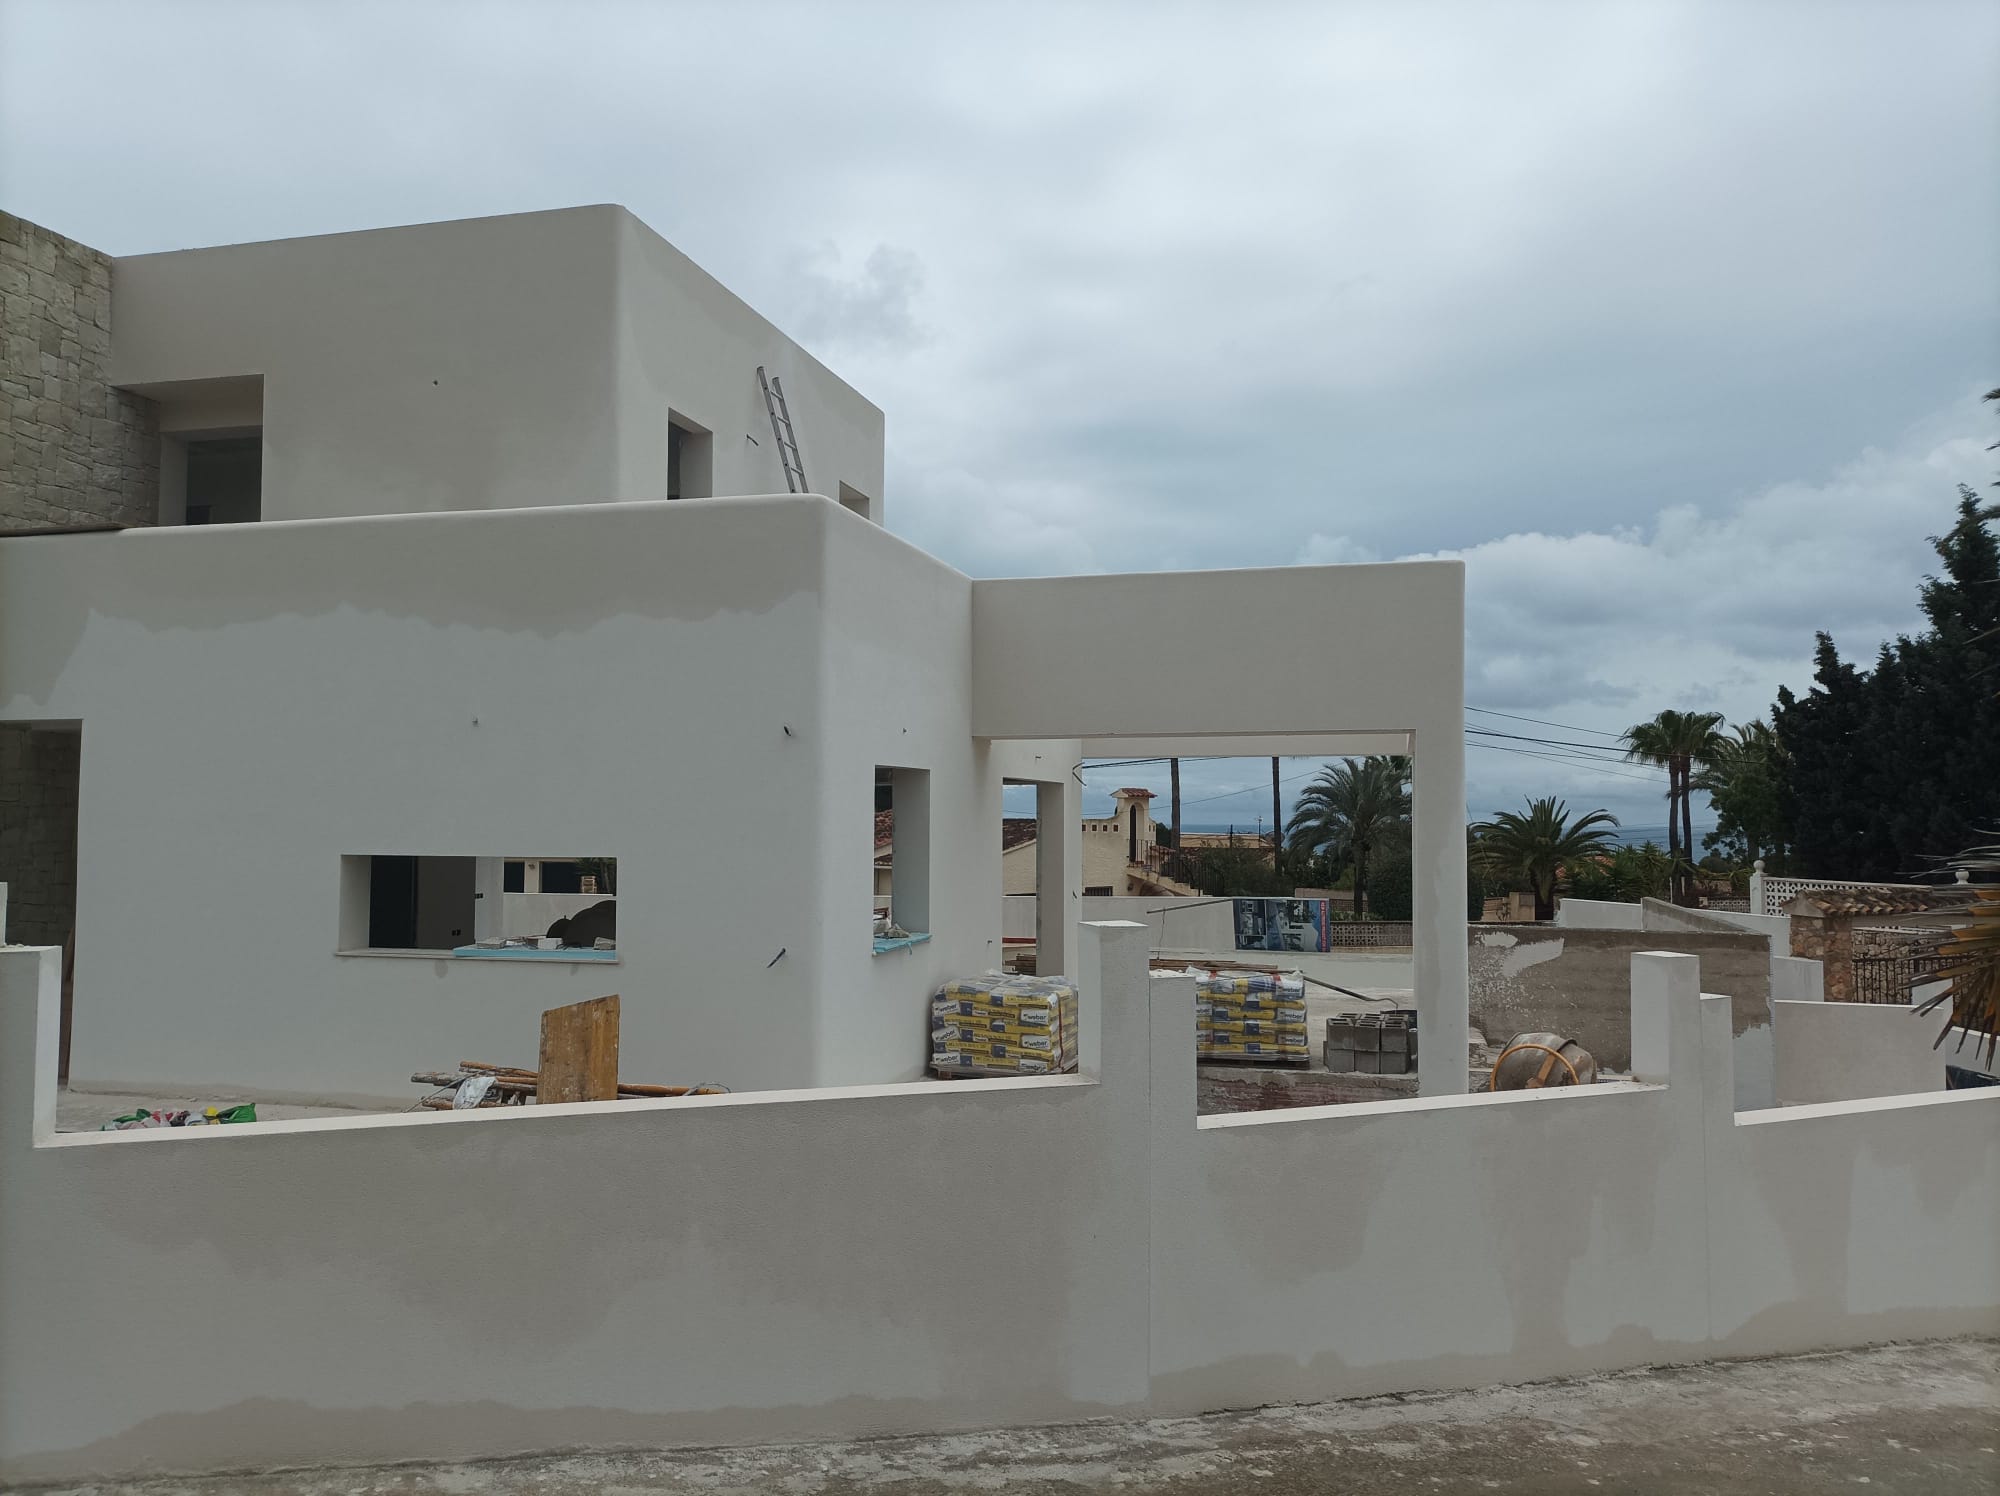 Villa neuve de style Ibiza à vendre à Baladrar Benissa, Costa Blanca